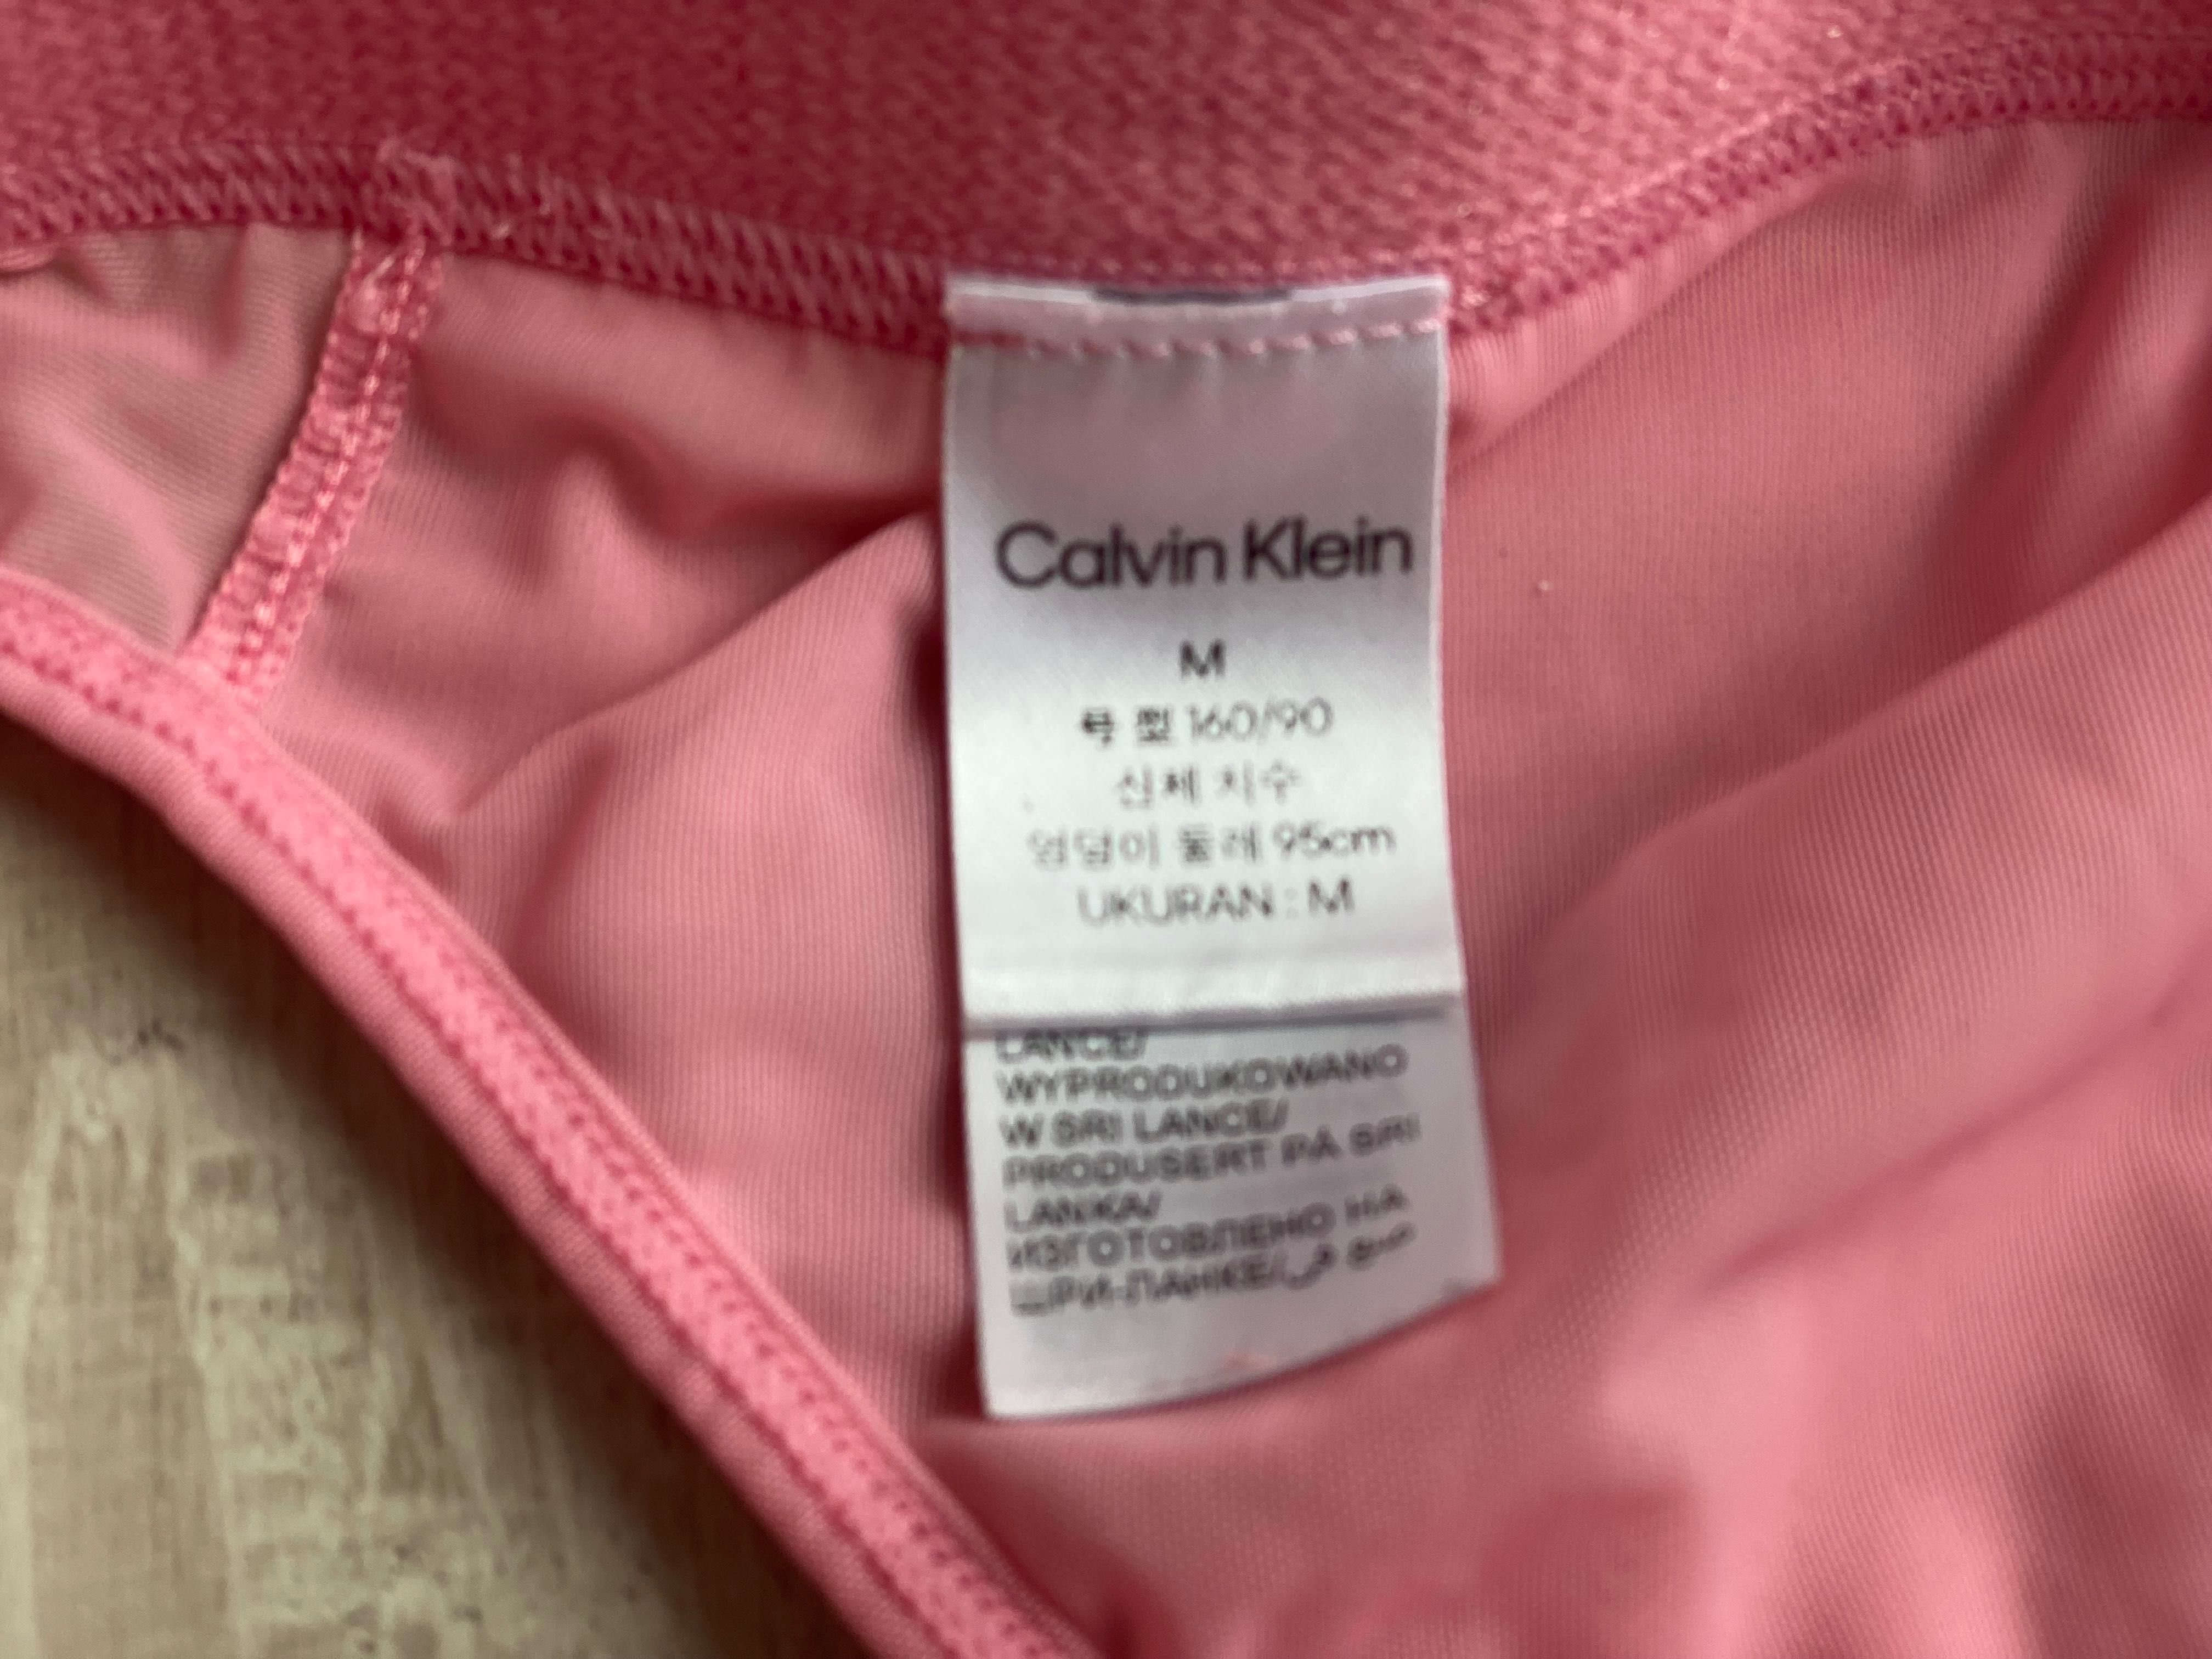 um conjunto de roupas íntimas S-M Calvin Klein